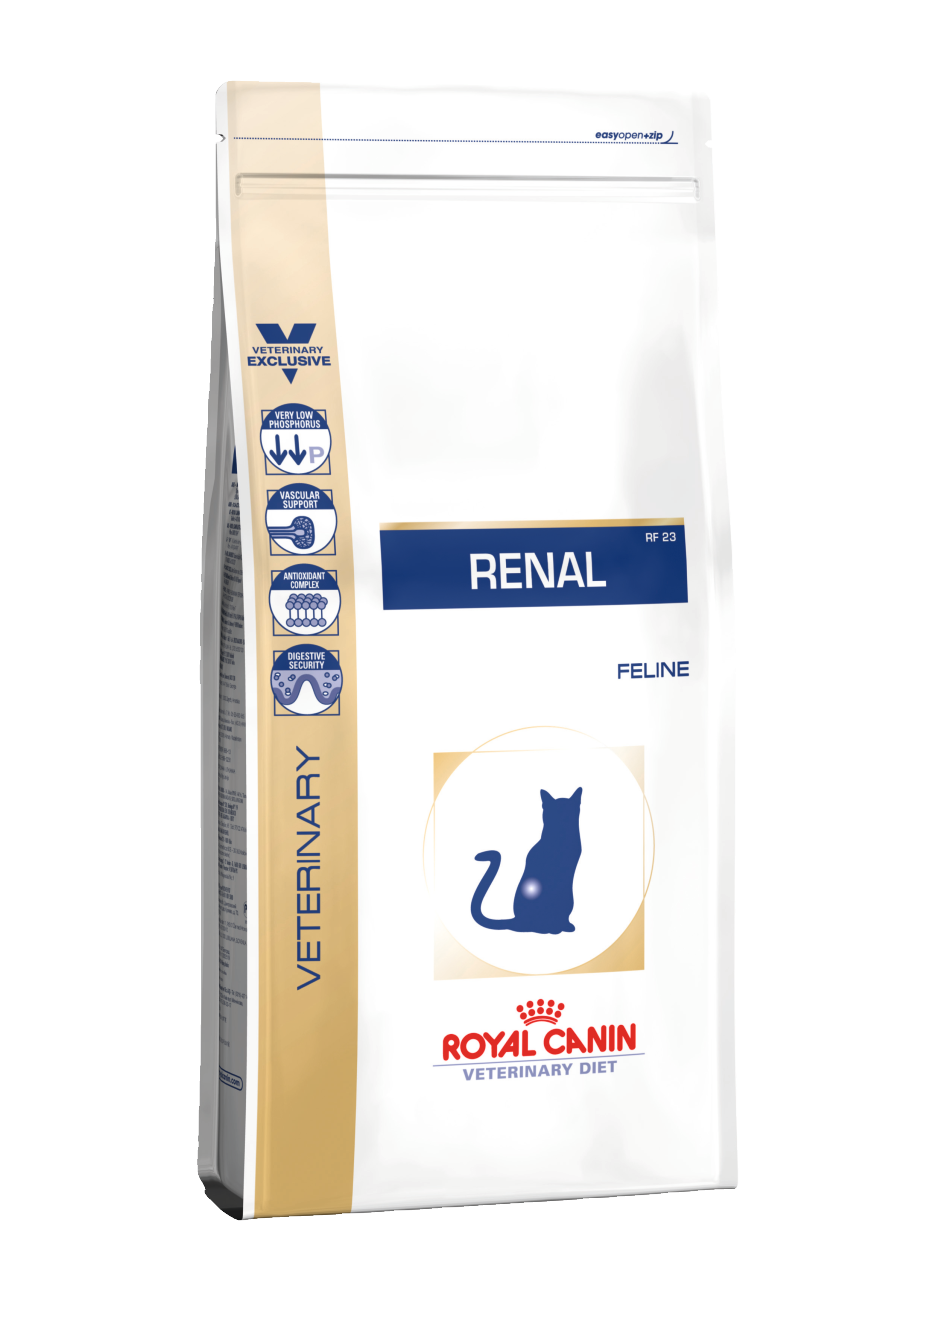 royal canin renal cat food